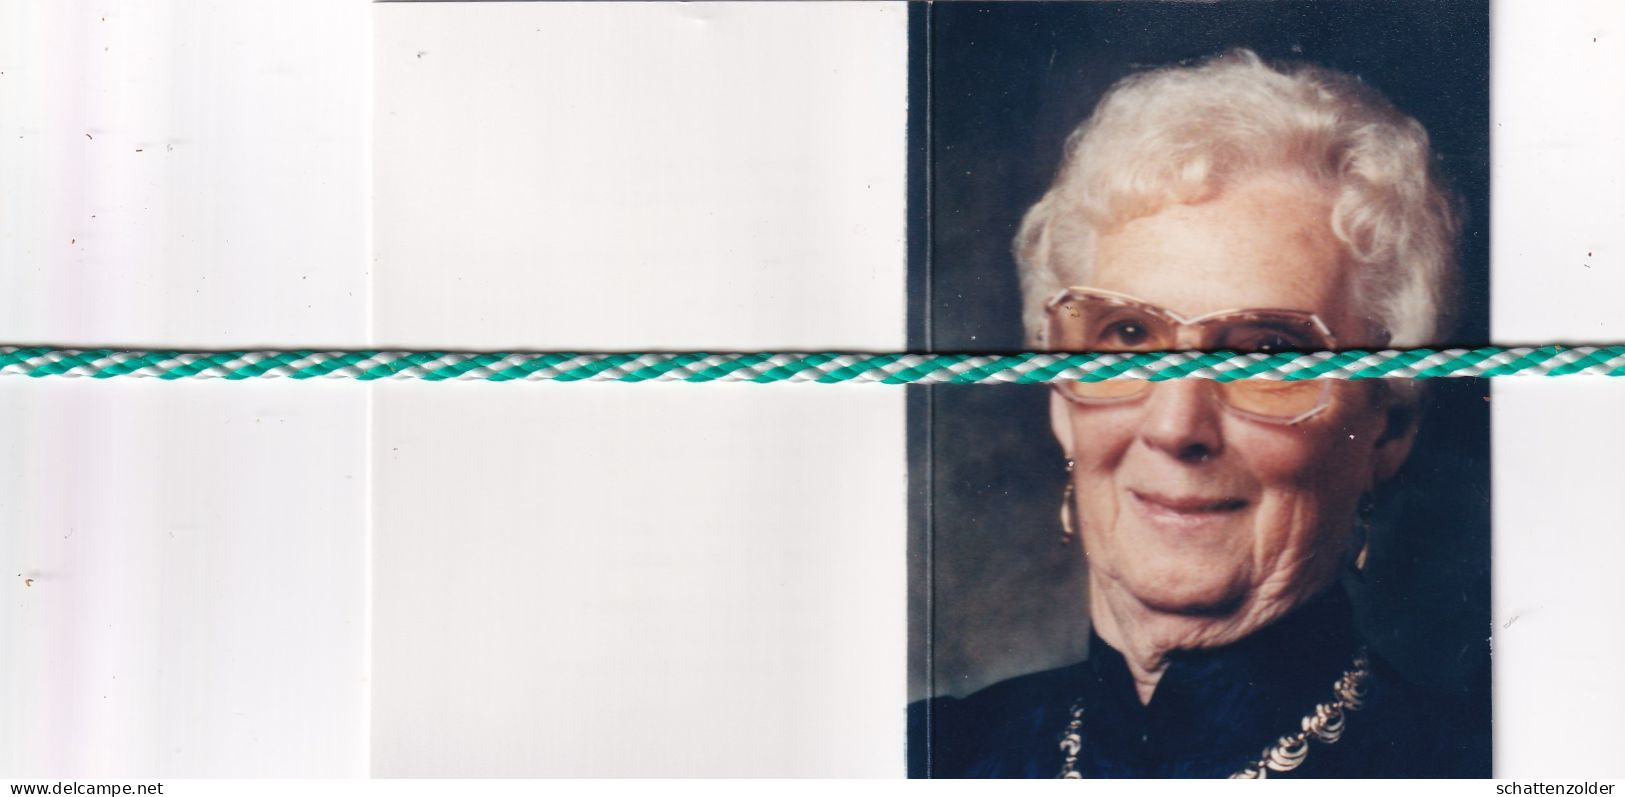 Ludovica Verhegge-Goethals, Gent 1913, 1995. Foto - Obituary Notices